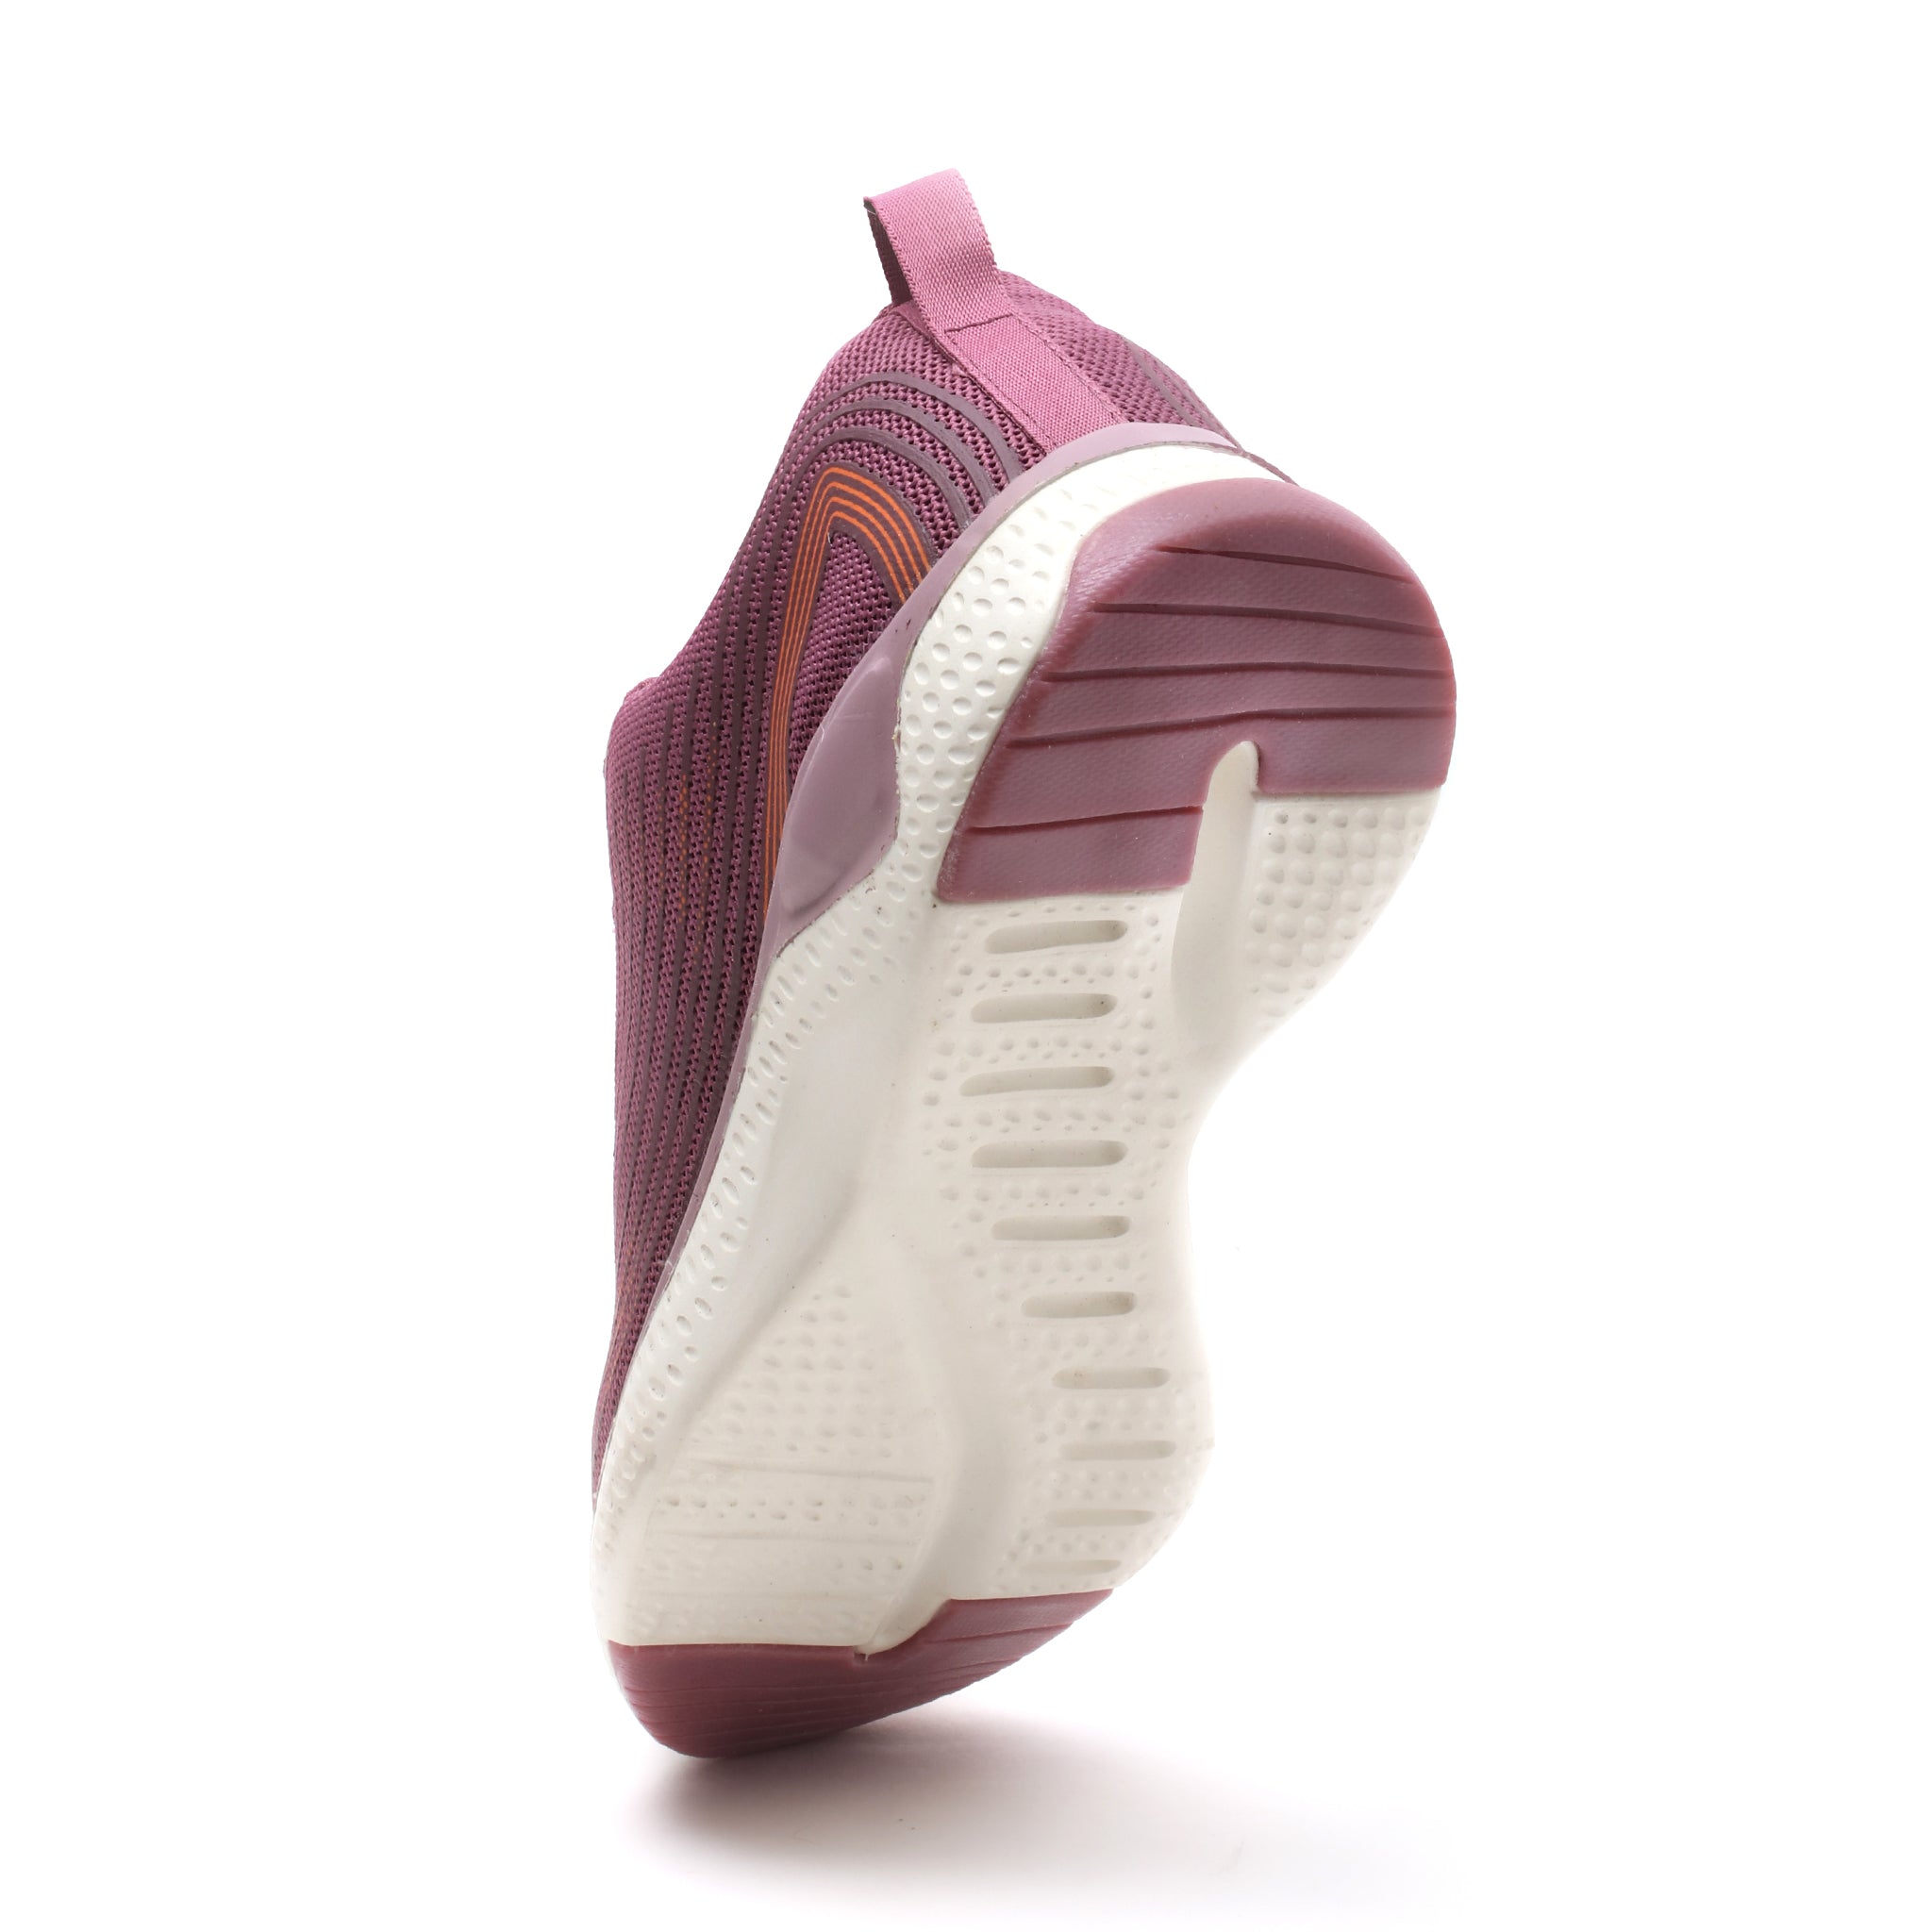 Impakto Women's Purple Running Shoes